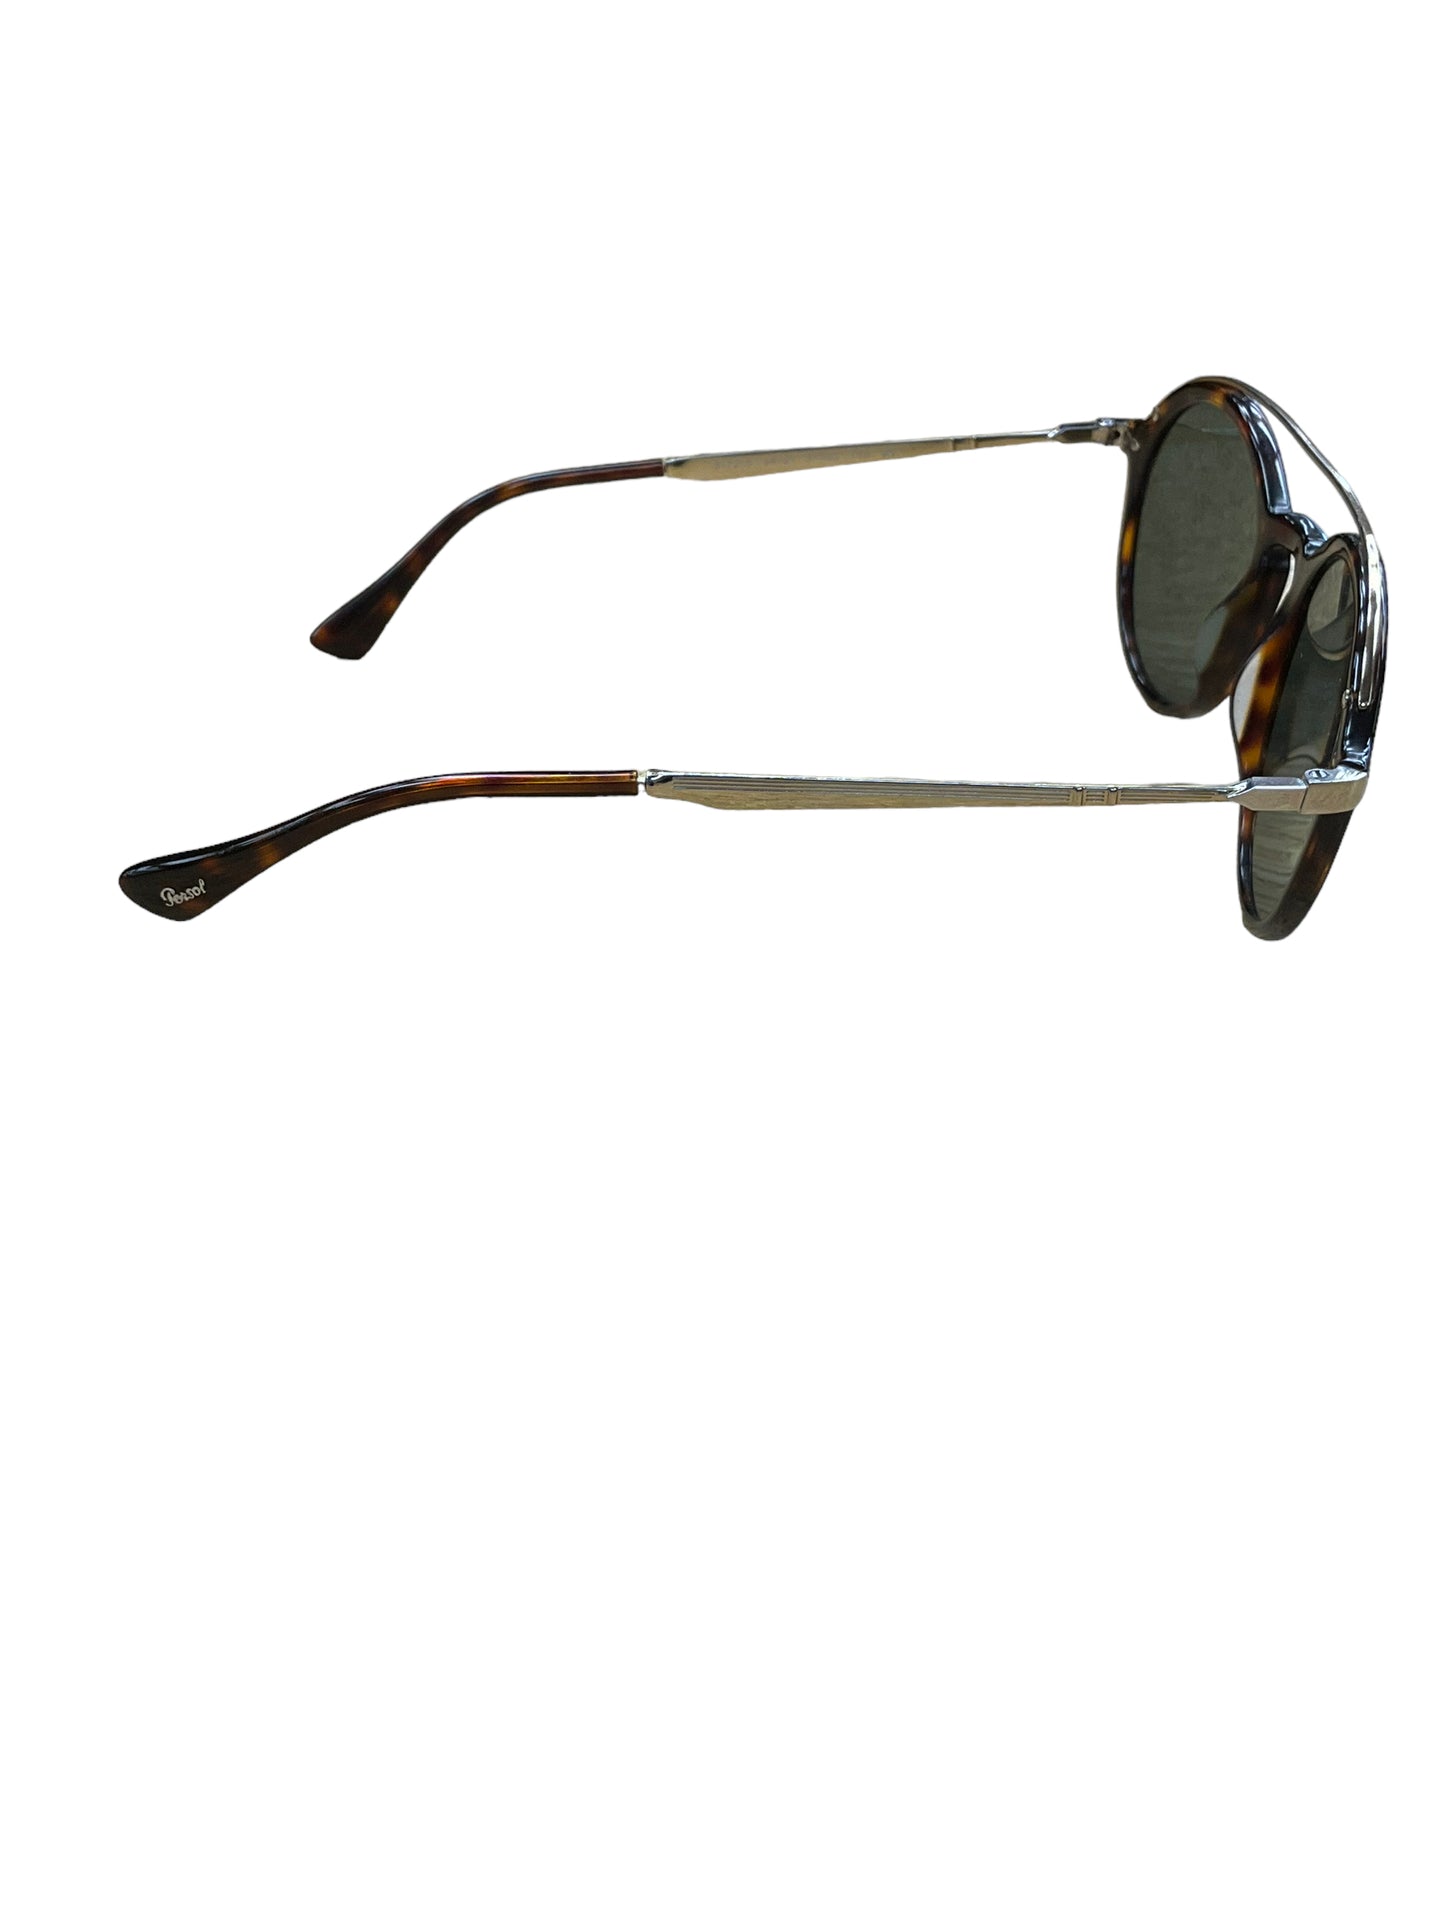 Sunglasses Designer By Clothes Mentor